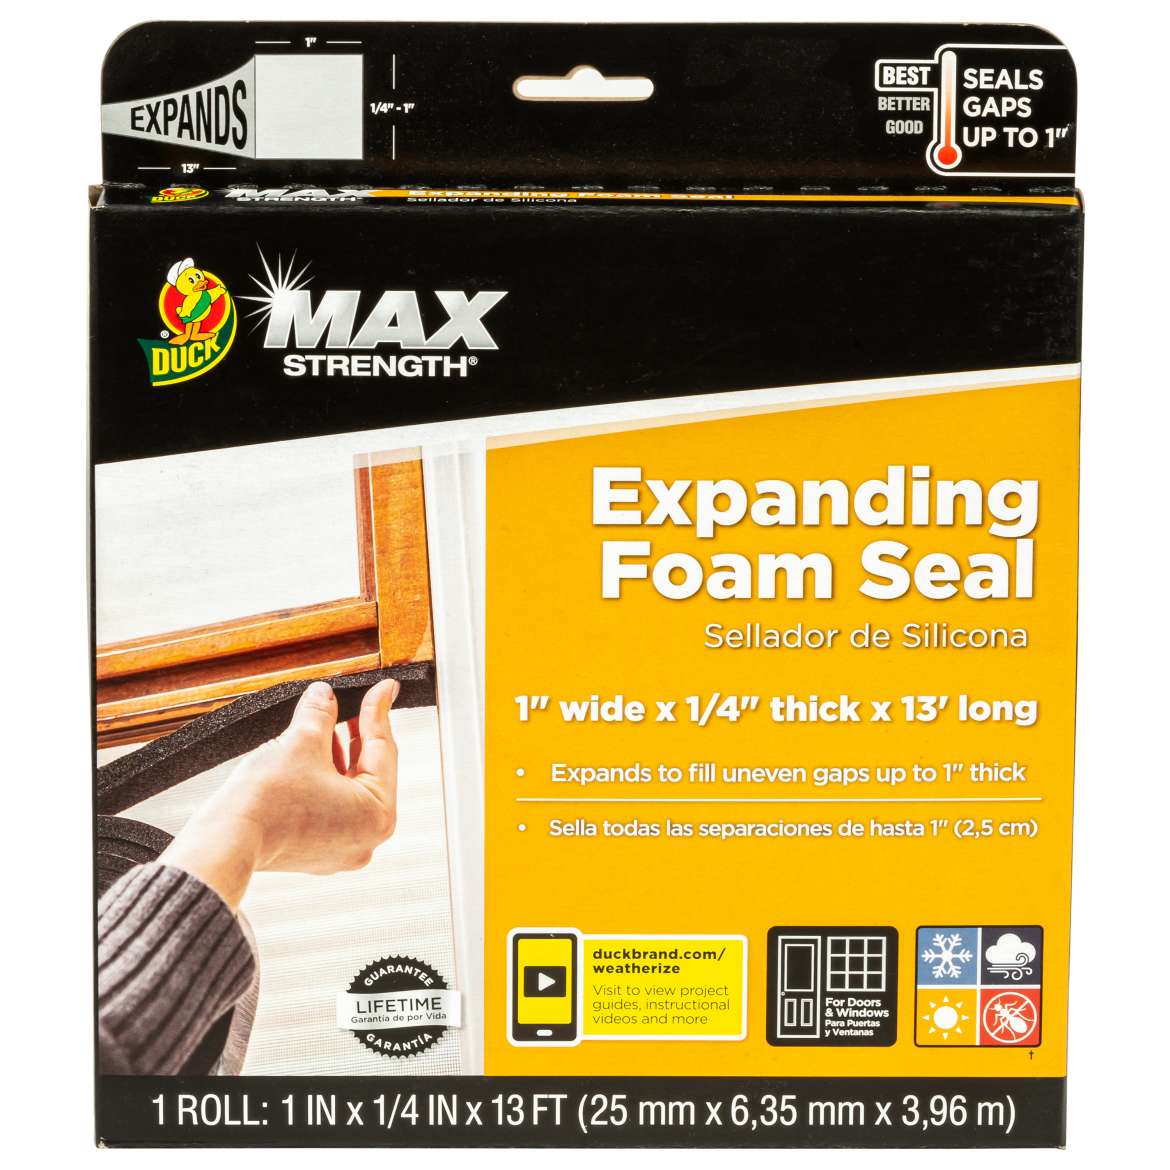 Max Strength Expanding Foam Seal